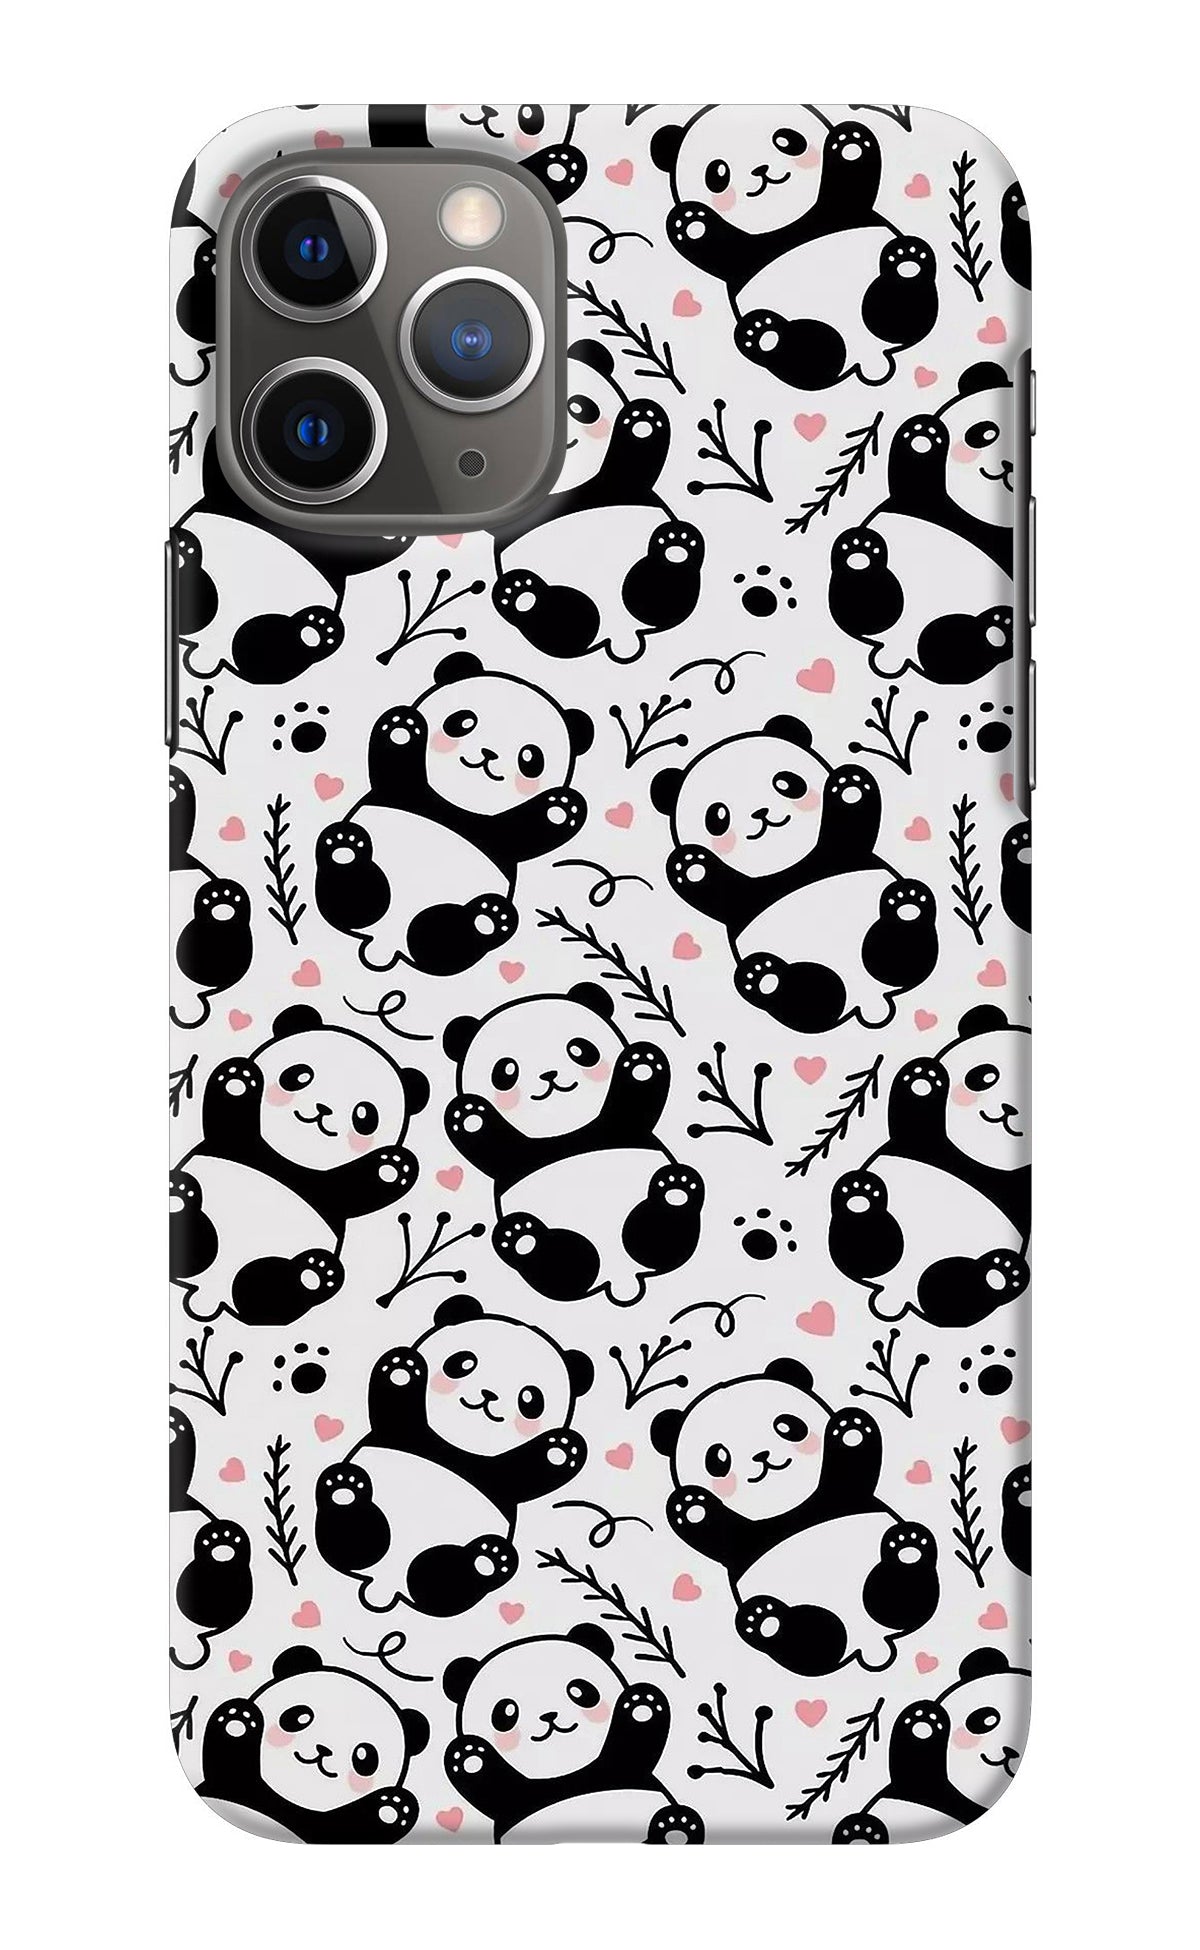 Cute Panda iPhone 11 Pro Back Cover